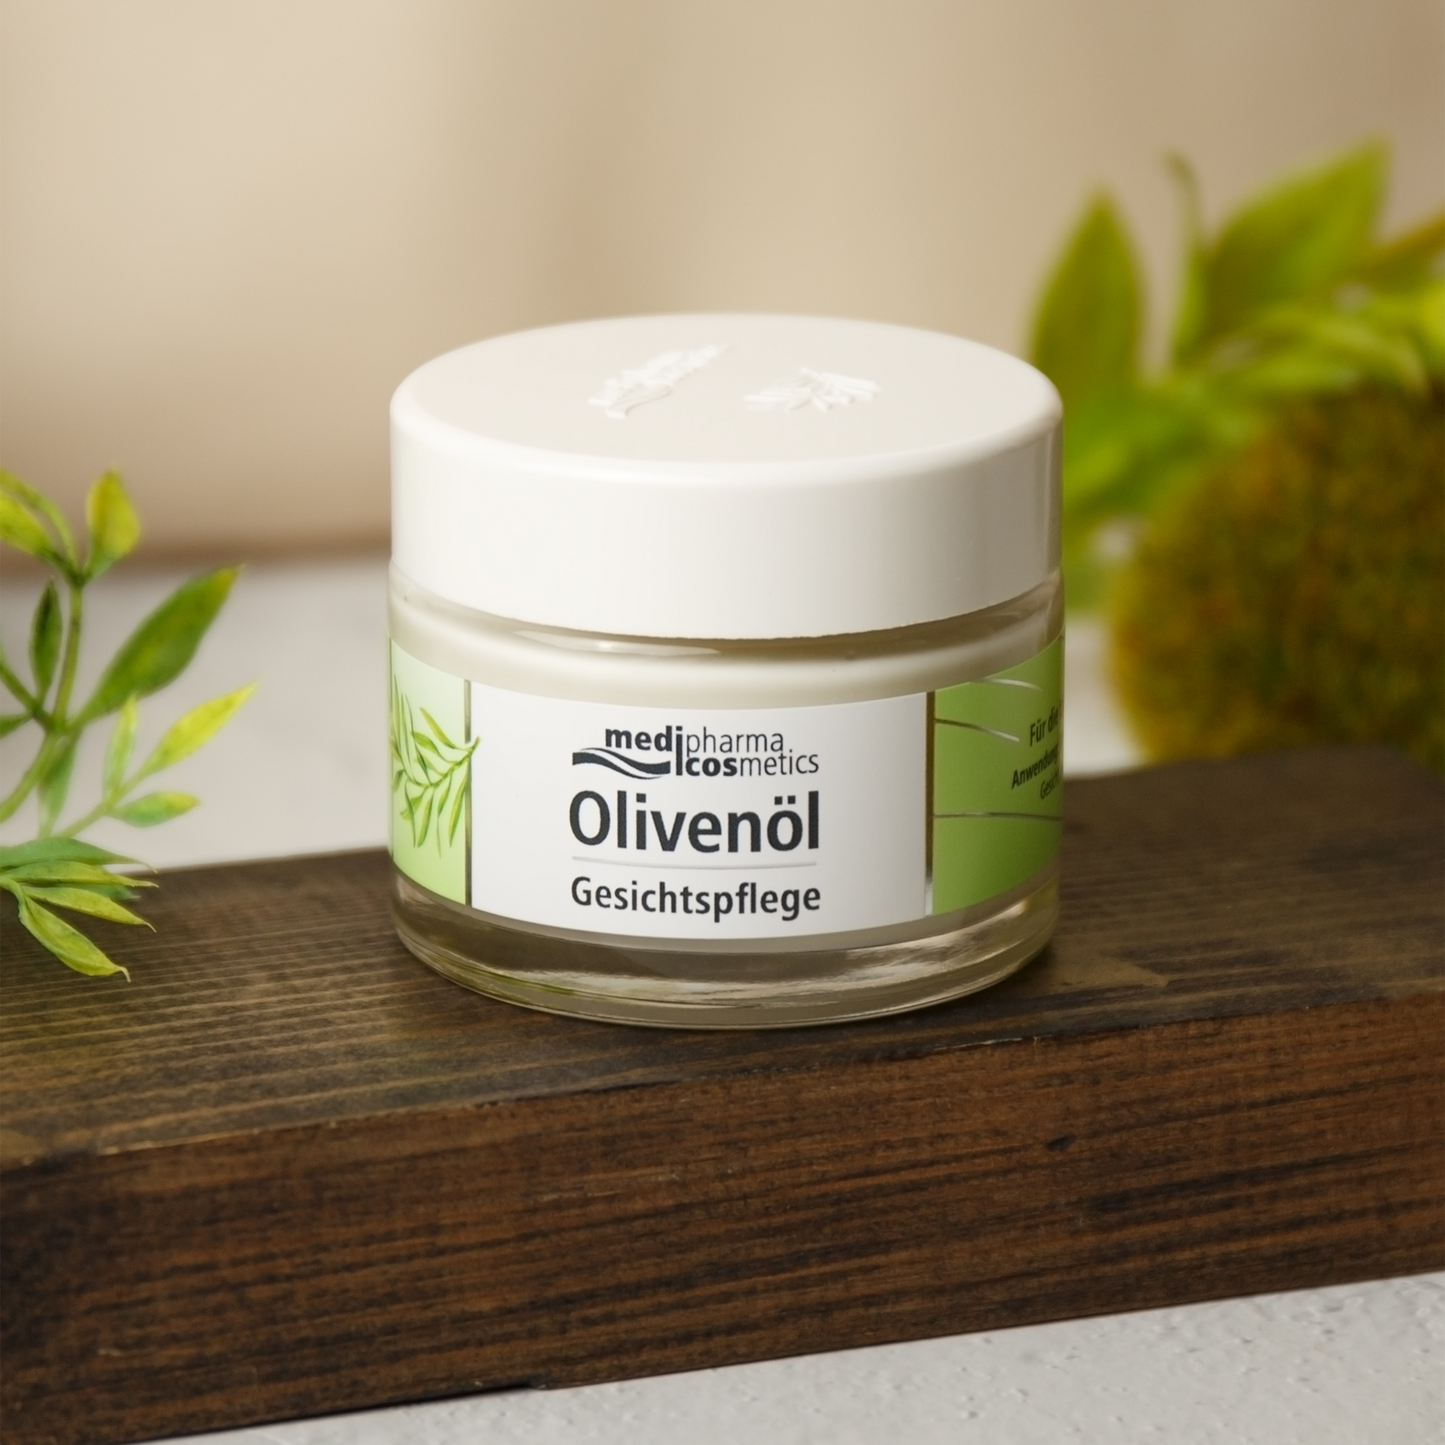 Medipharma Cosmetics Olivenol Face Cream (Gesichtspflege) (50 ml) #19812